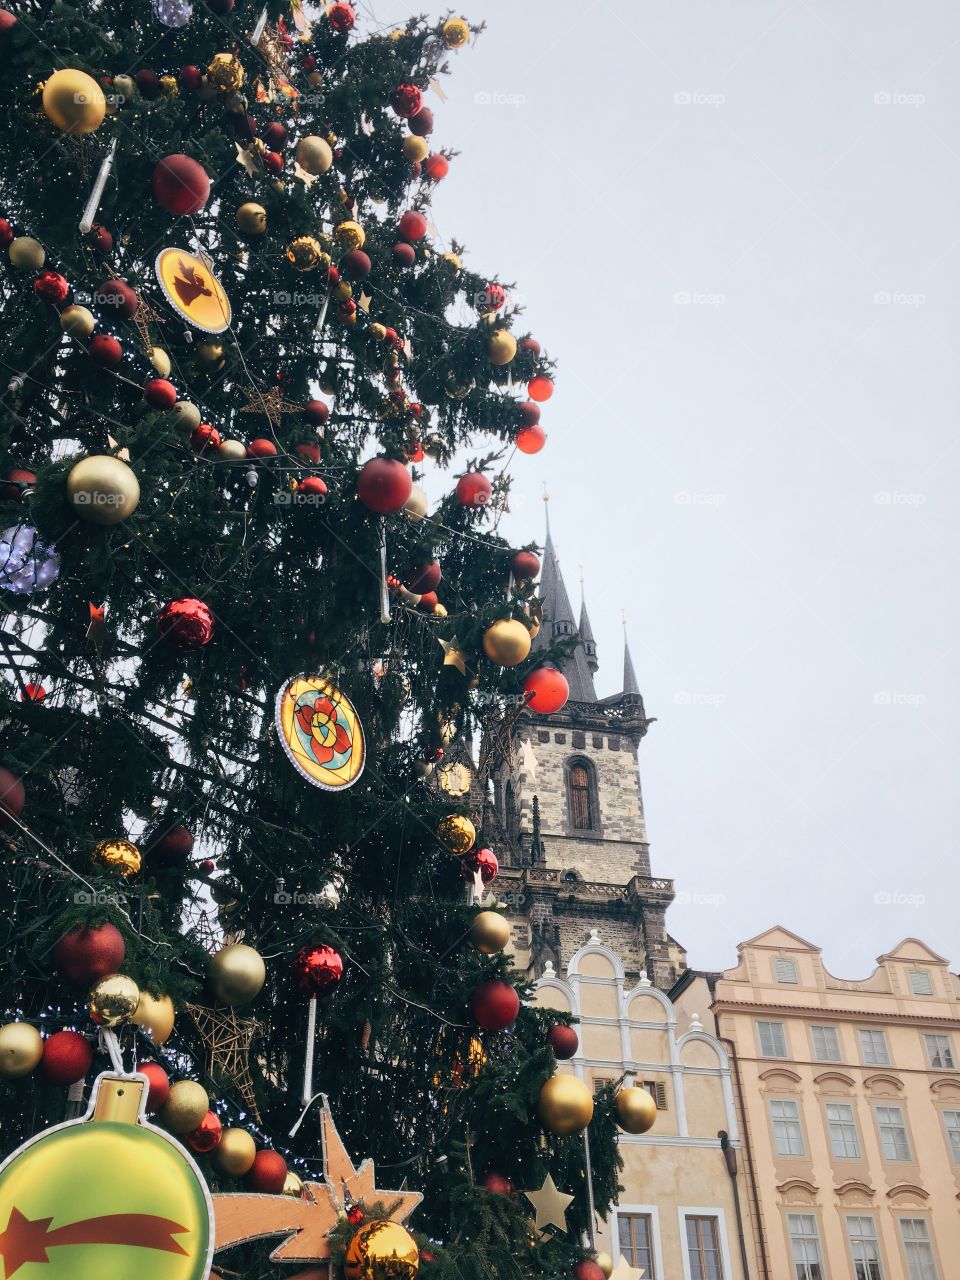 Christmas in Prague!